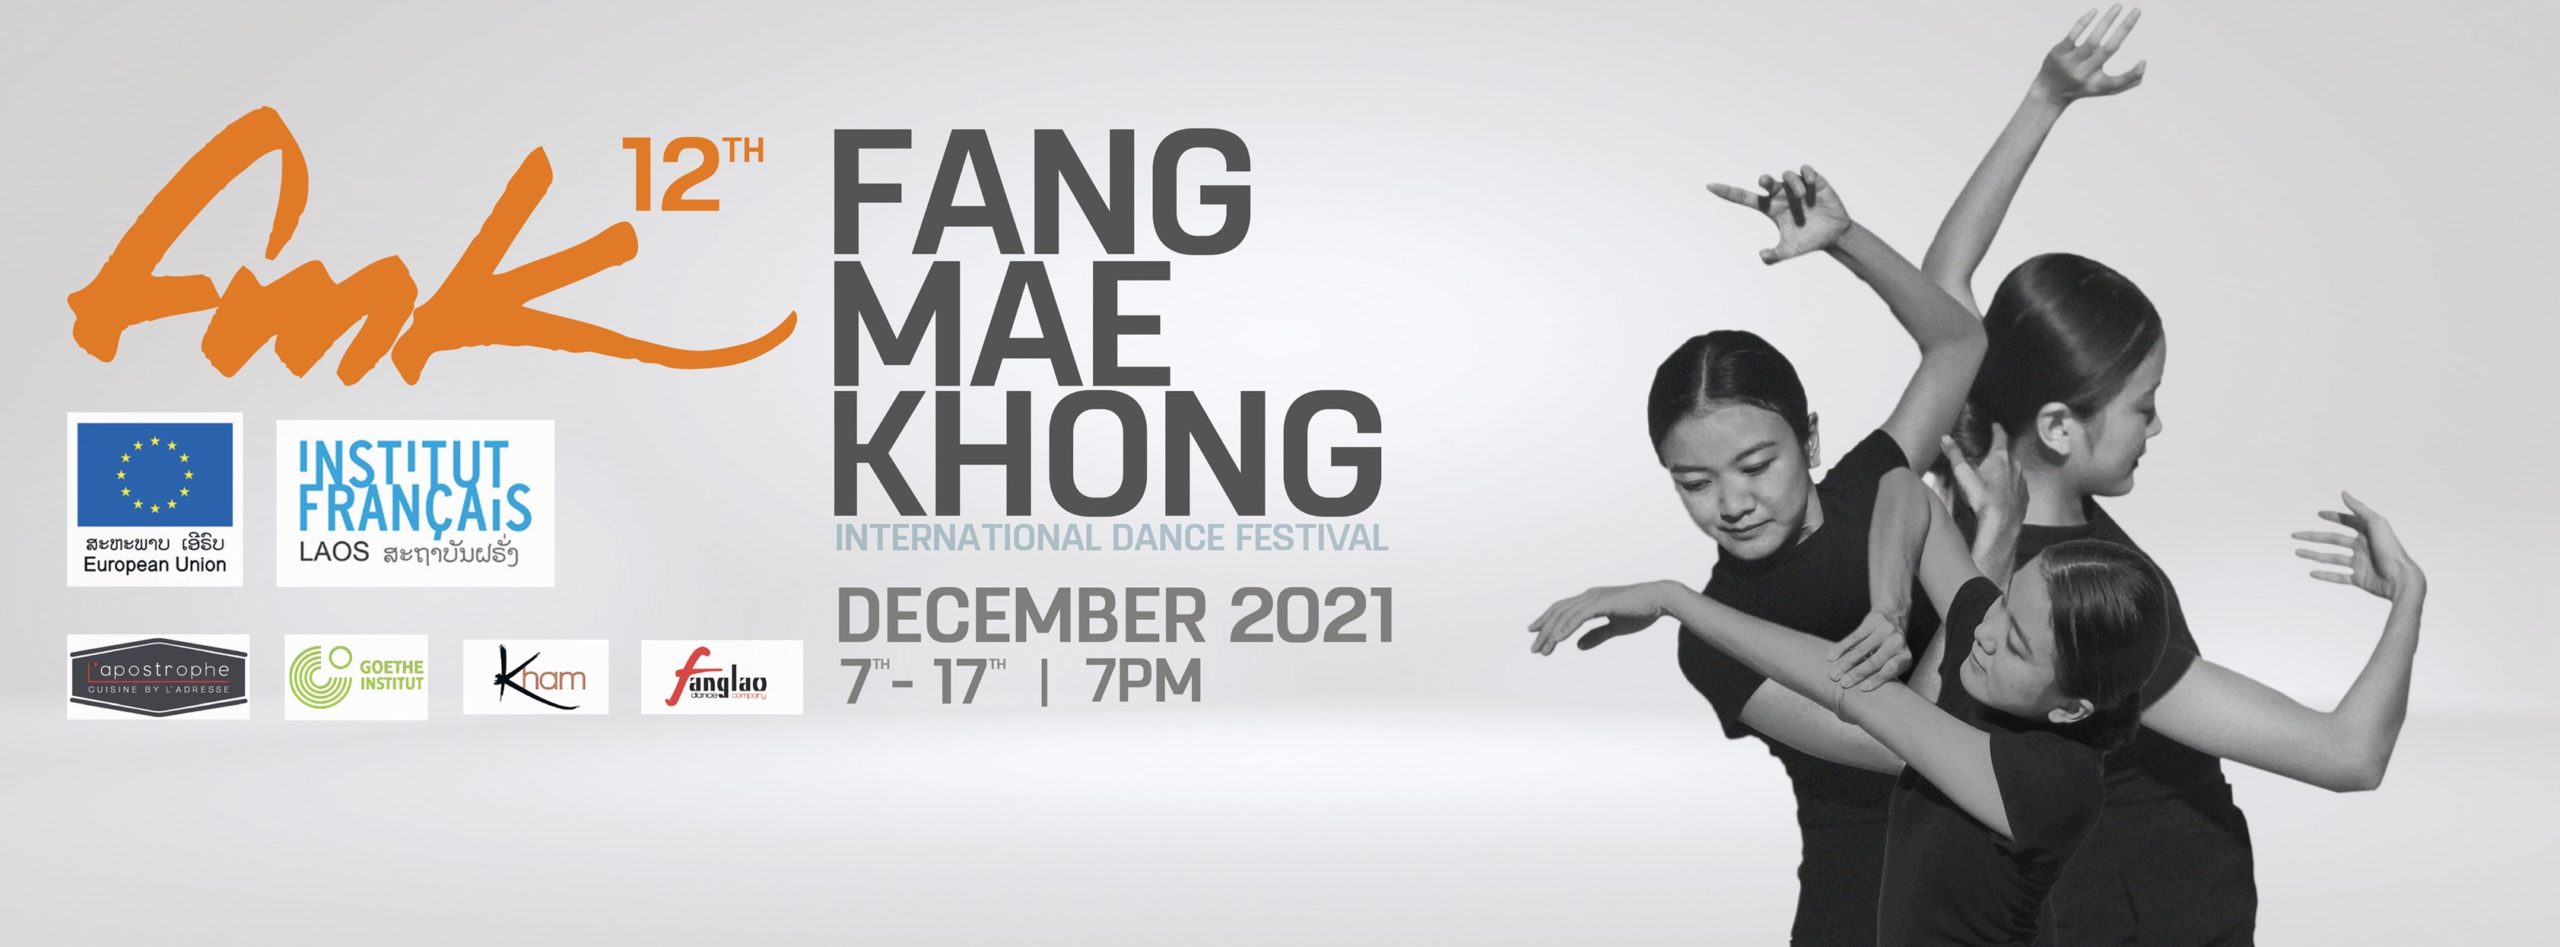 FESTIVAL DE DANSE INTERNATIONAL FANG MAE KHONG, 12E ÉDITION !